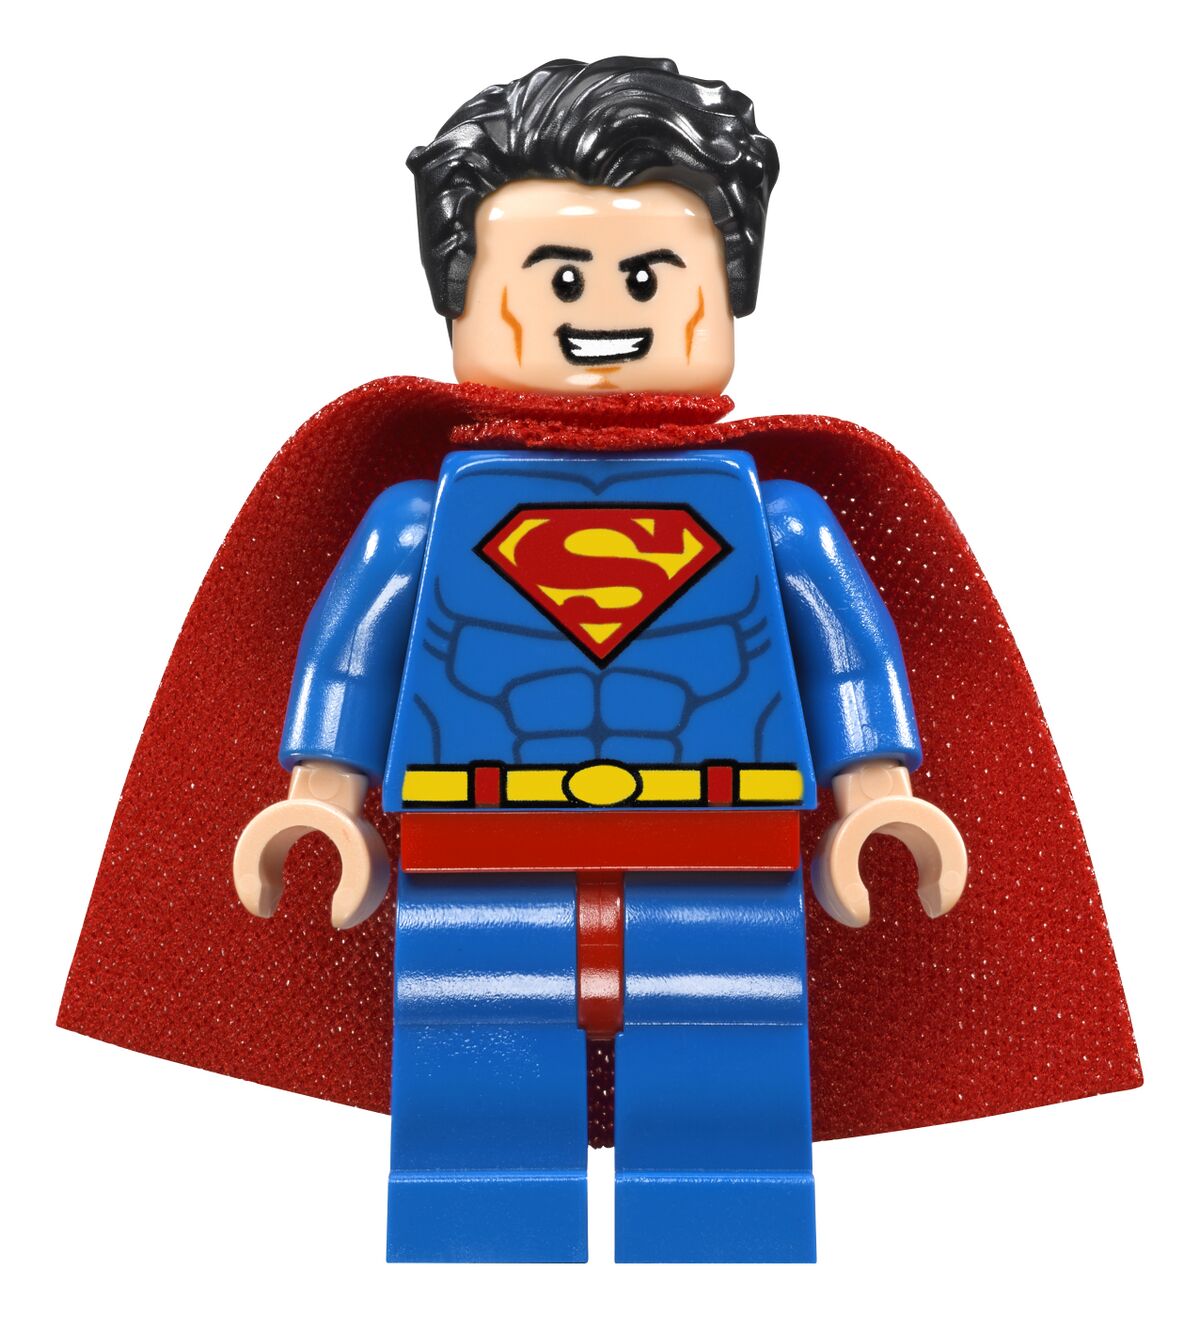 Superman - Brickipedia, the LEGO Wiki